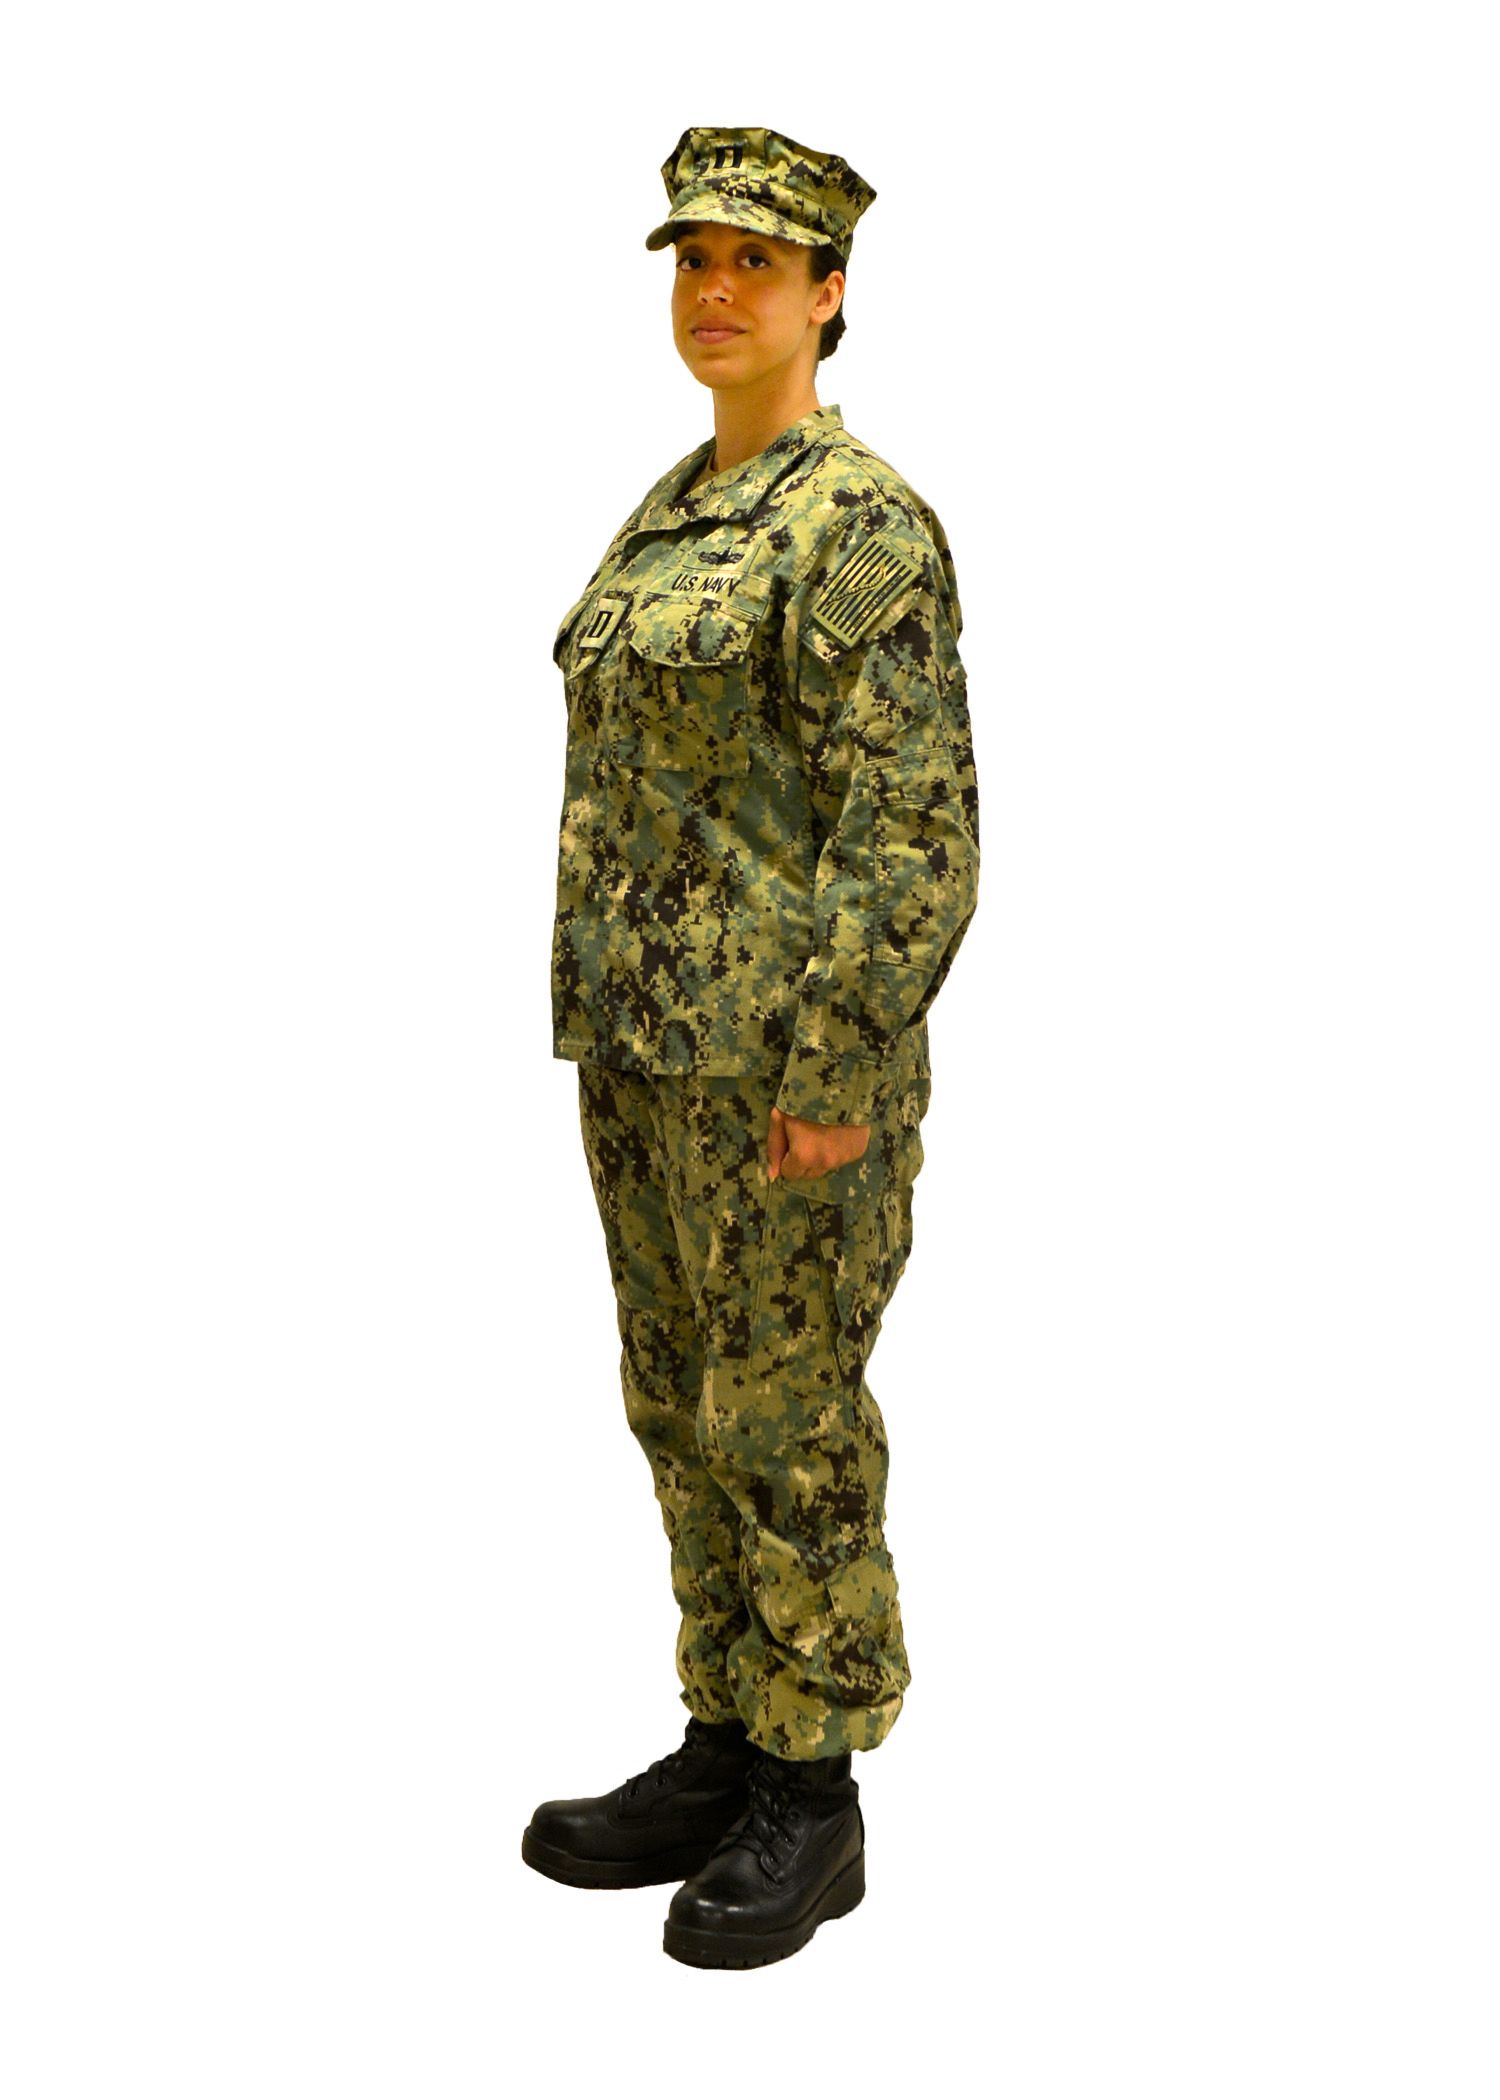 Navy says goodbye to aquaflage, hello to camouflage uniforms